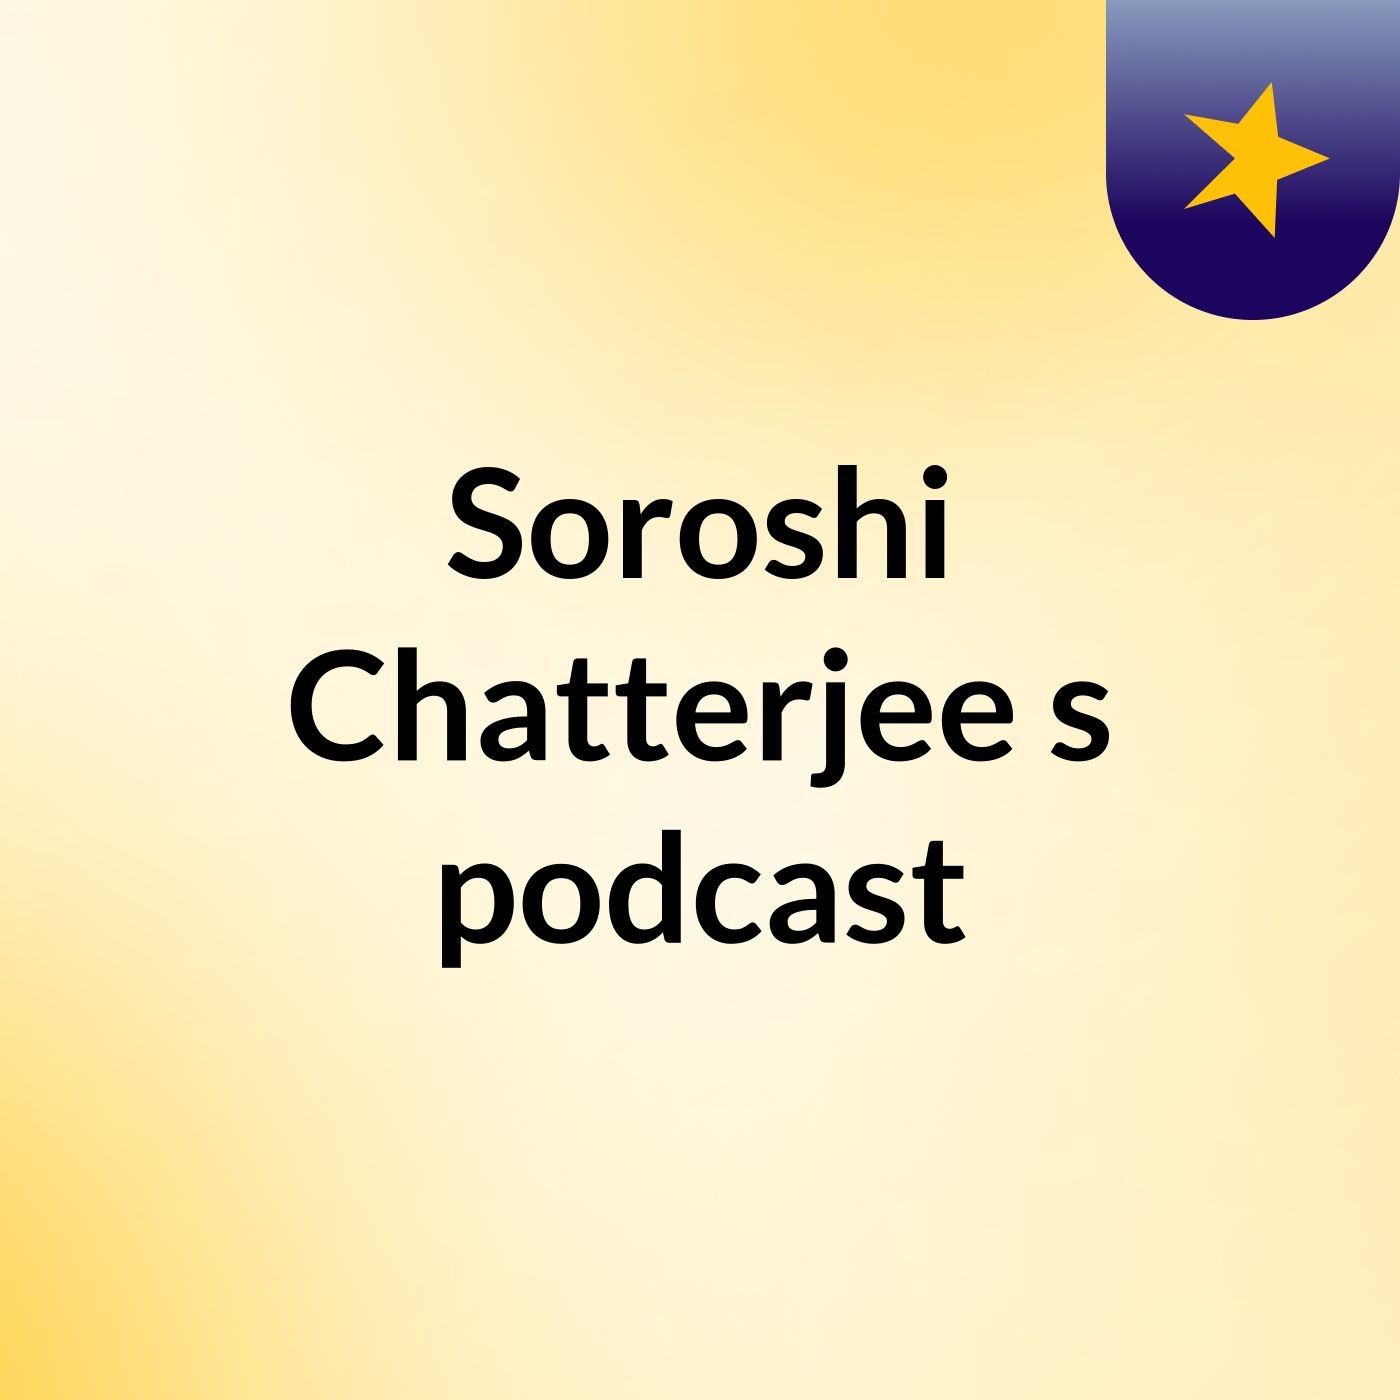 Soroshi Chatterjee's podcast